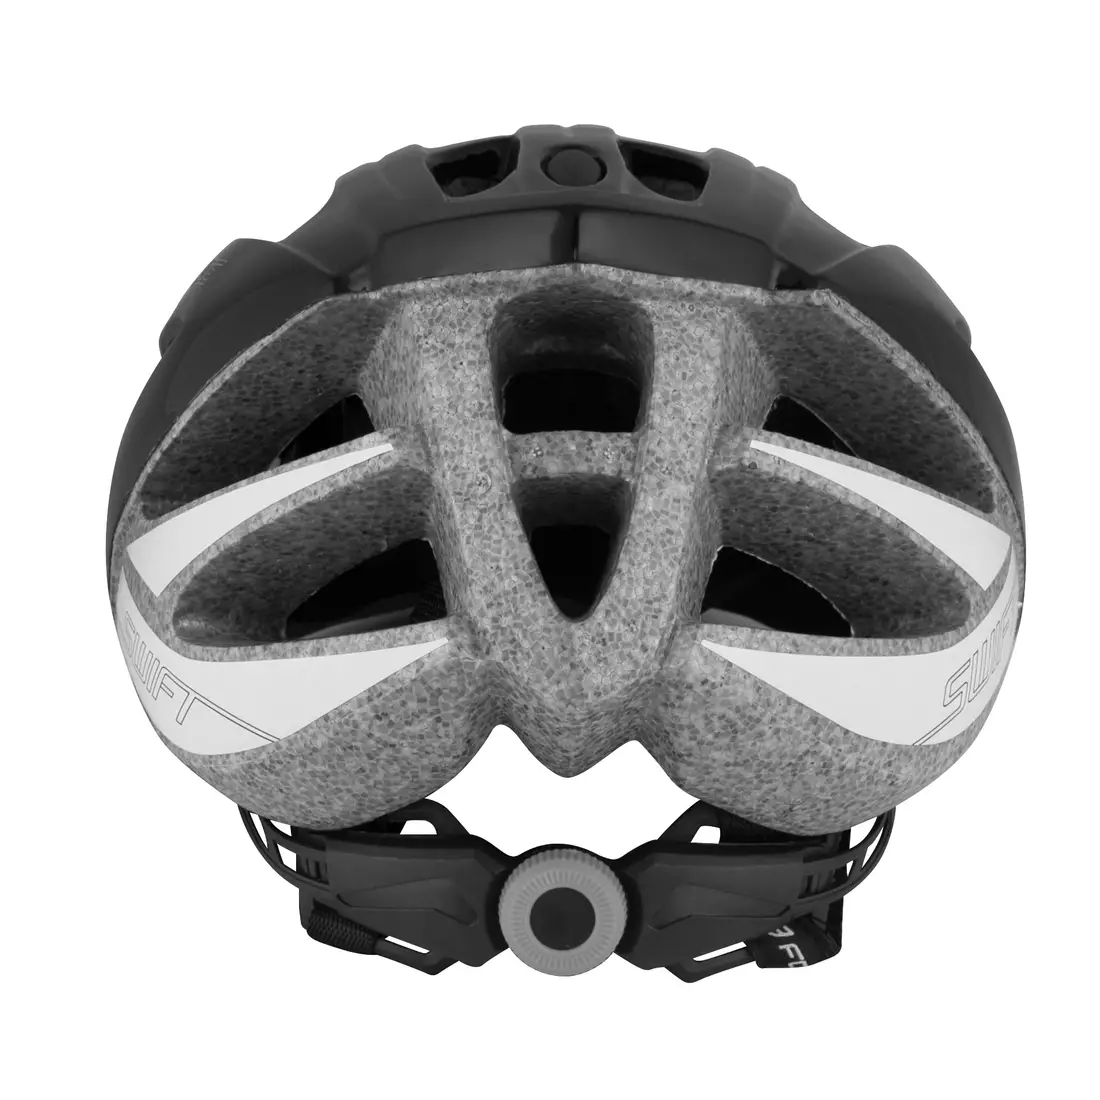 FORCE SWIFT Cyklistická helma black 902893